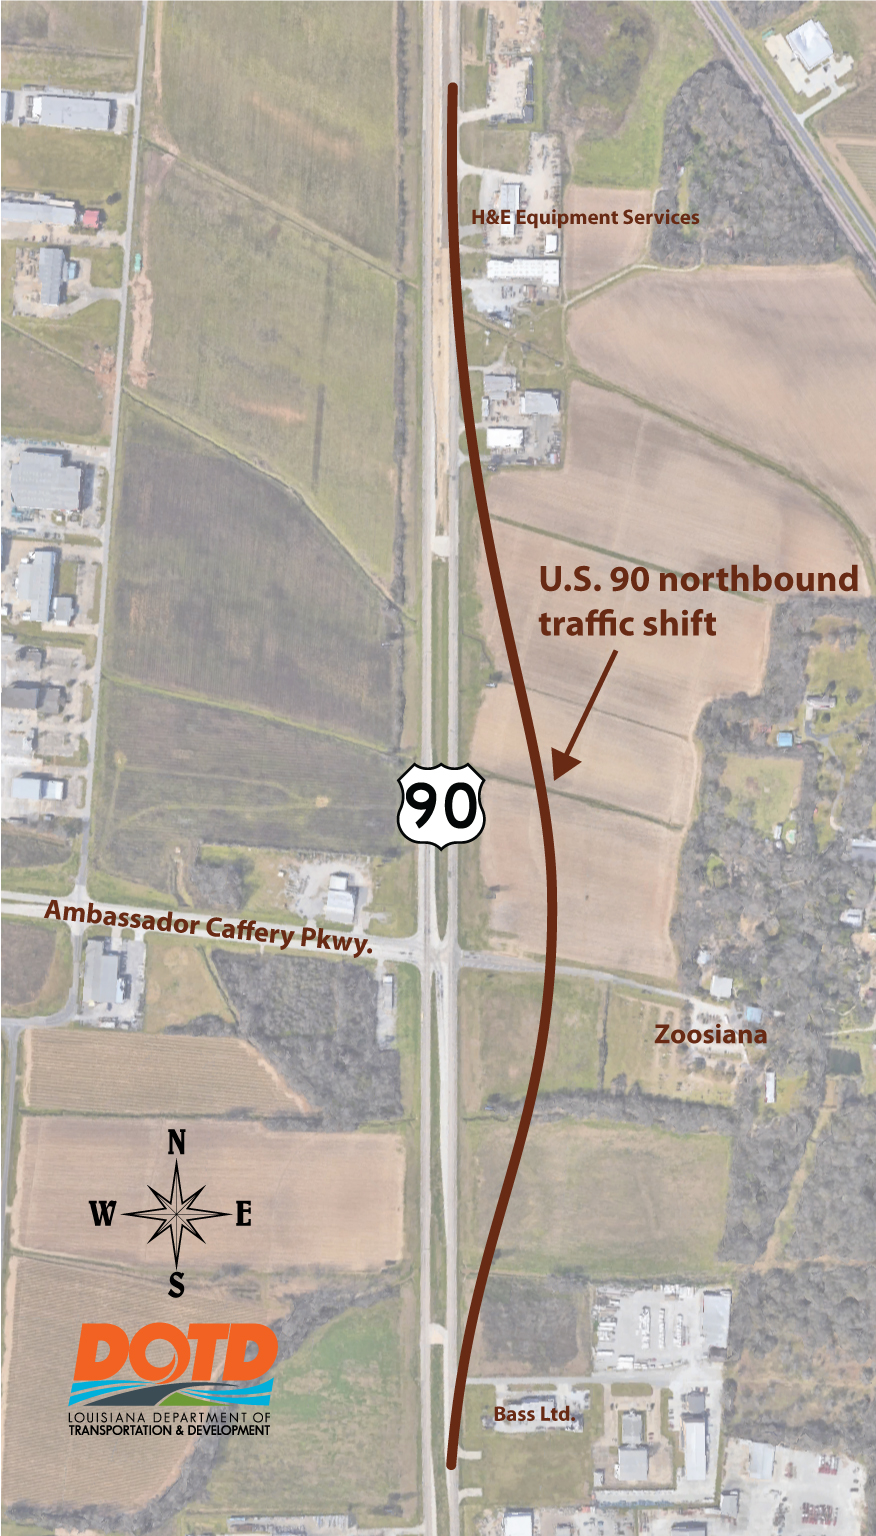 U.S. 90 northbound traffic shift area